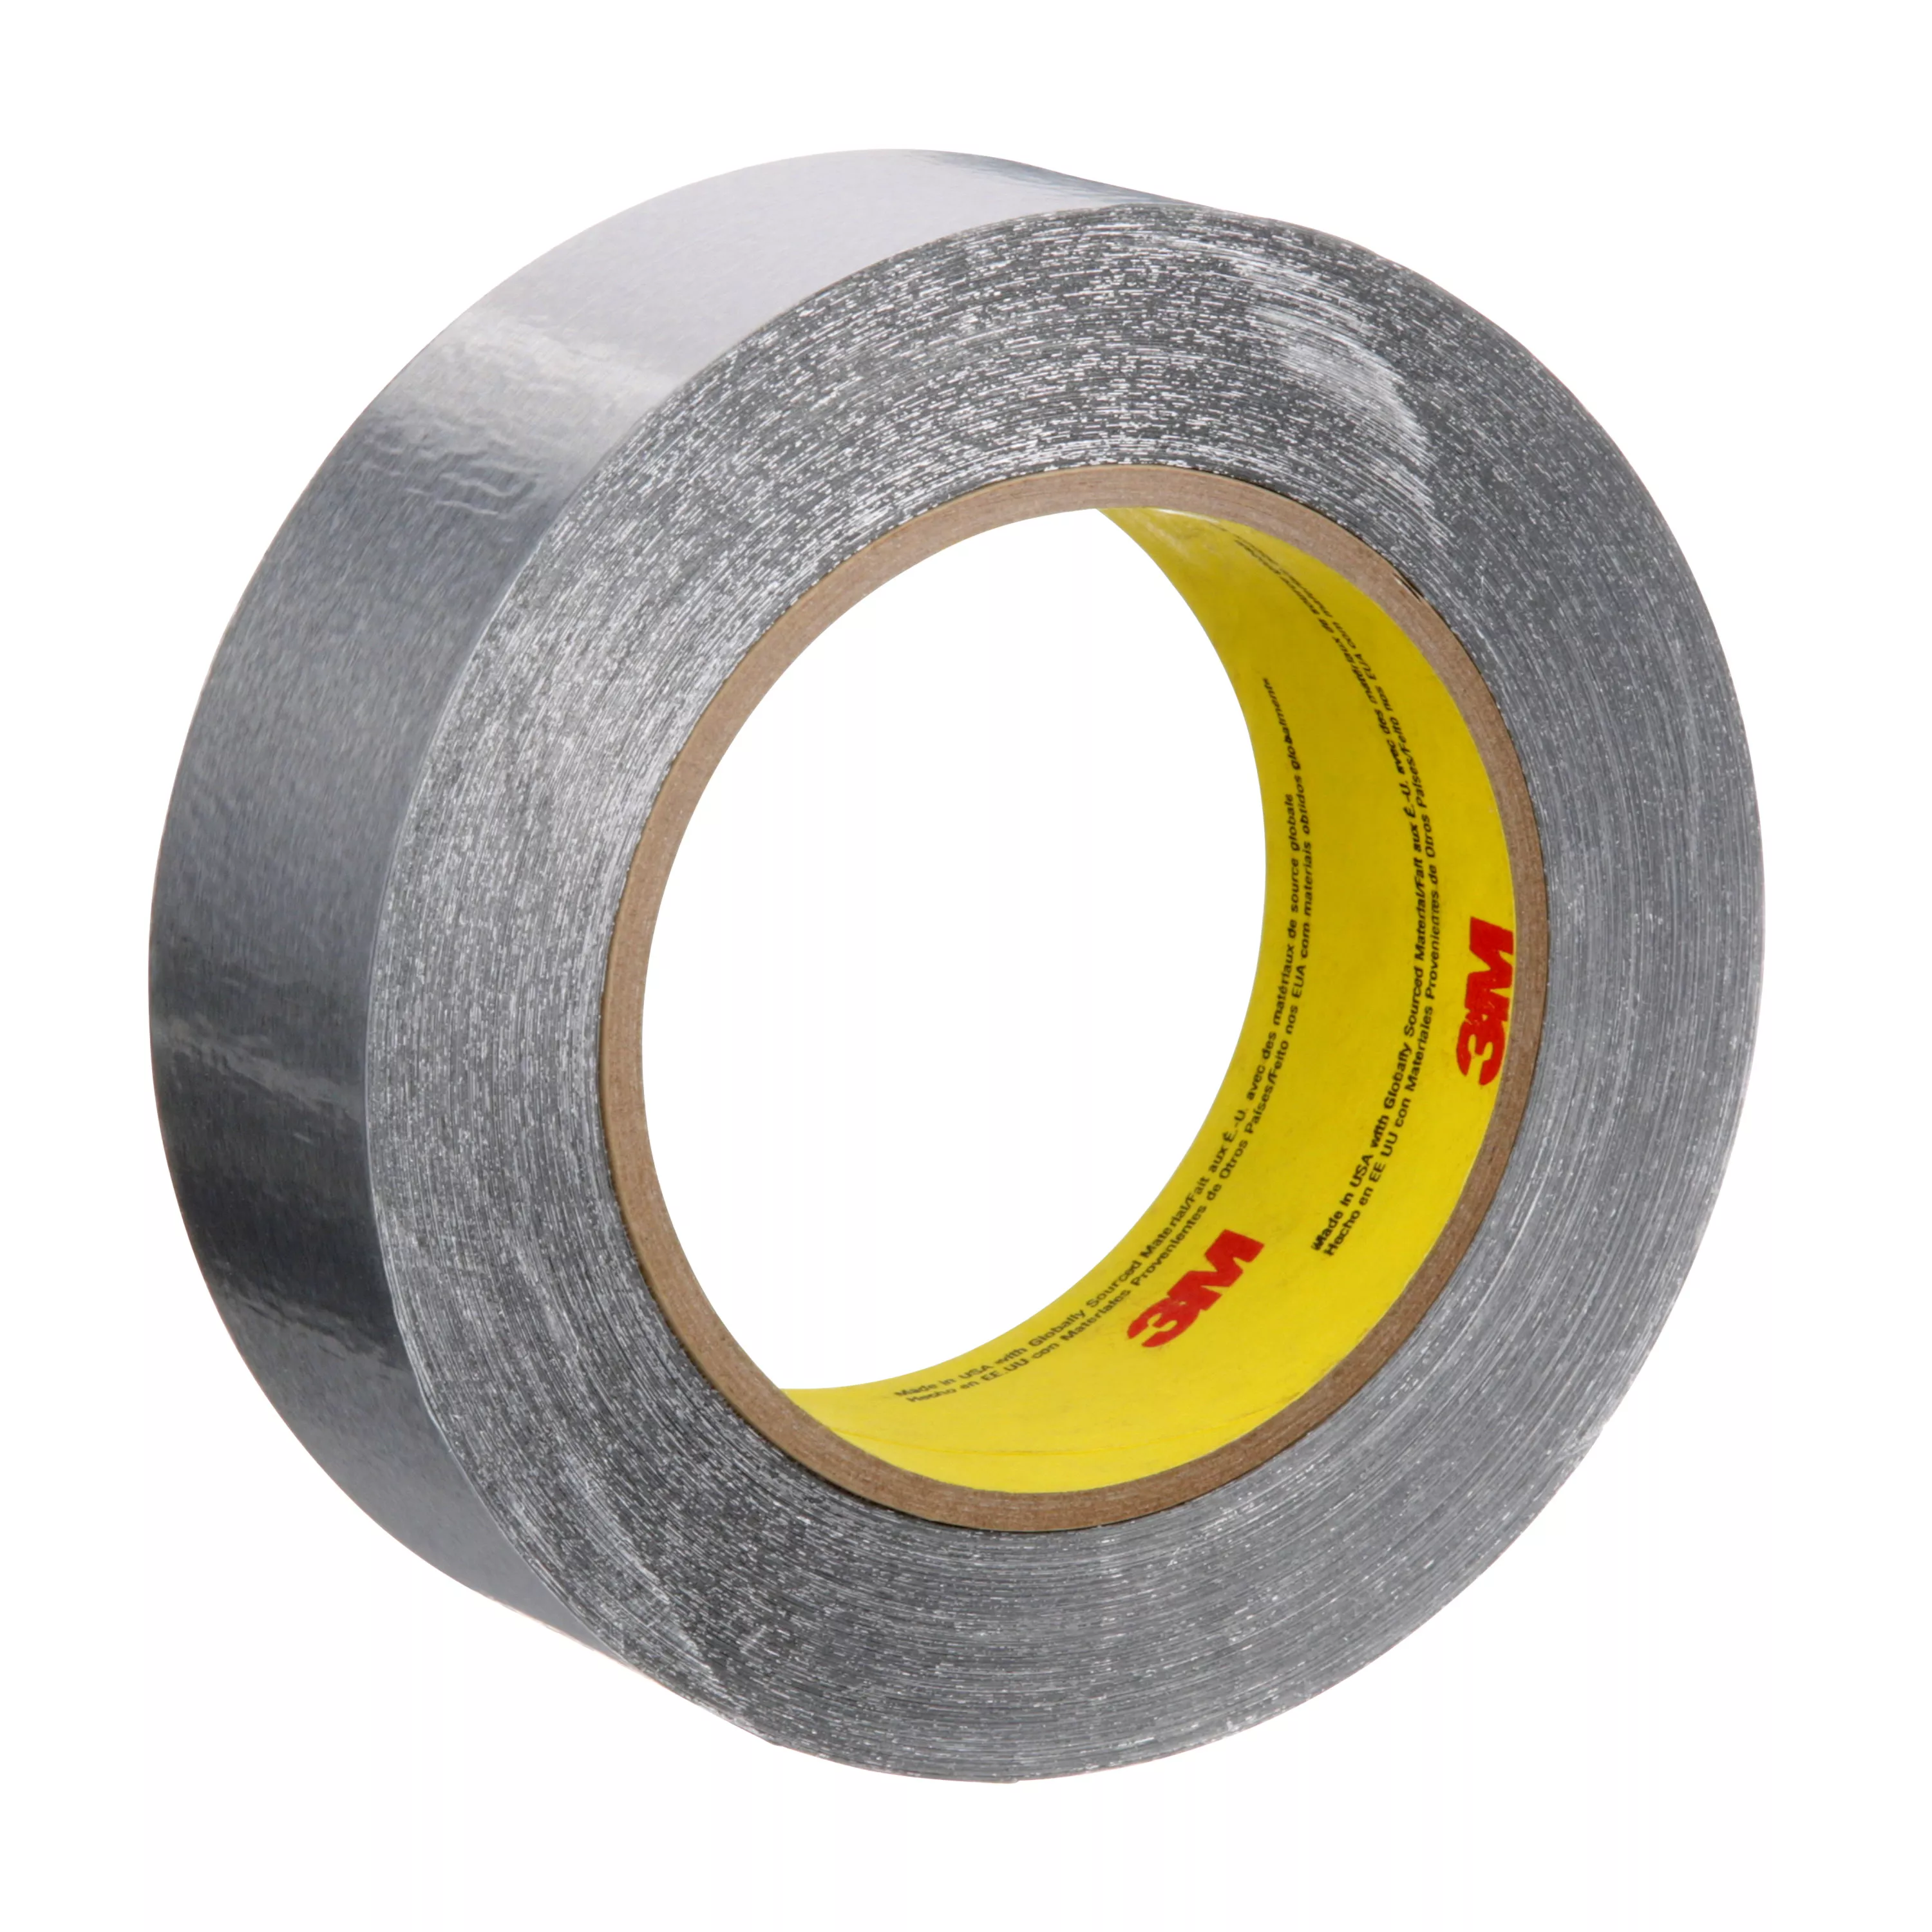 3M™ Aluminum Foil Tape 425, Silver, 1 1/2 in x 60 yd, 4.6 mil, 24
Roll/Case